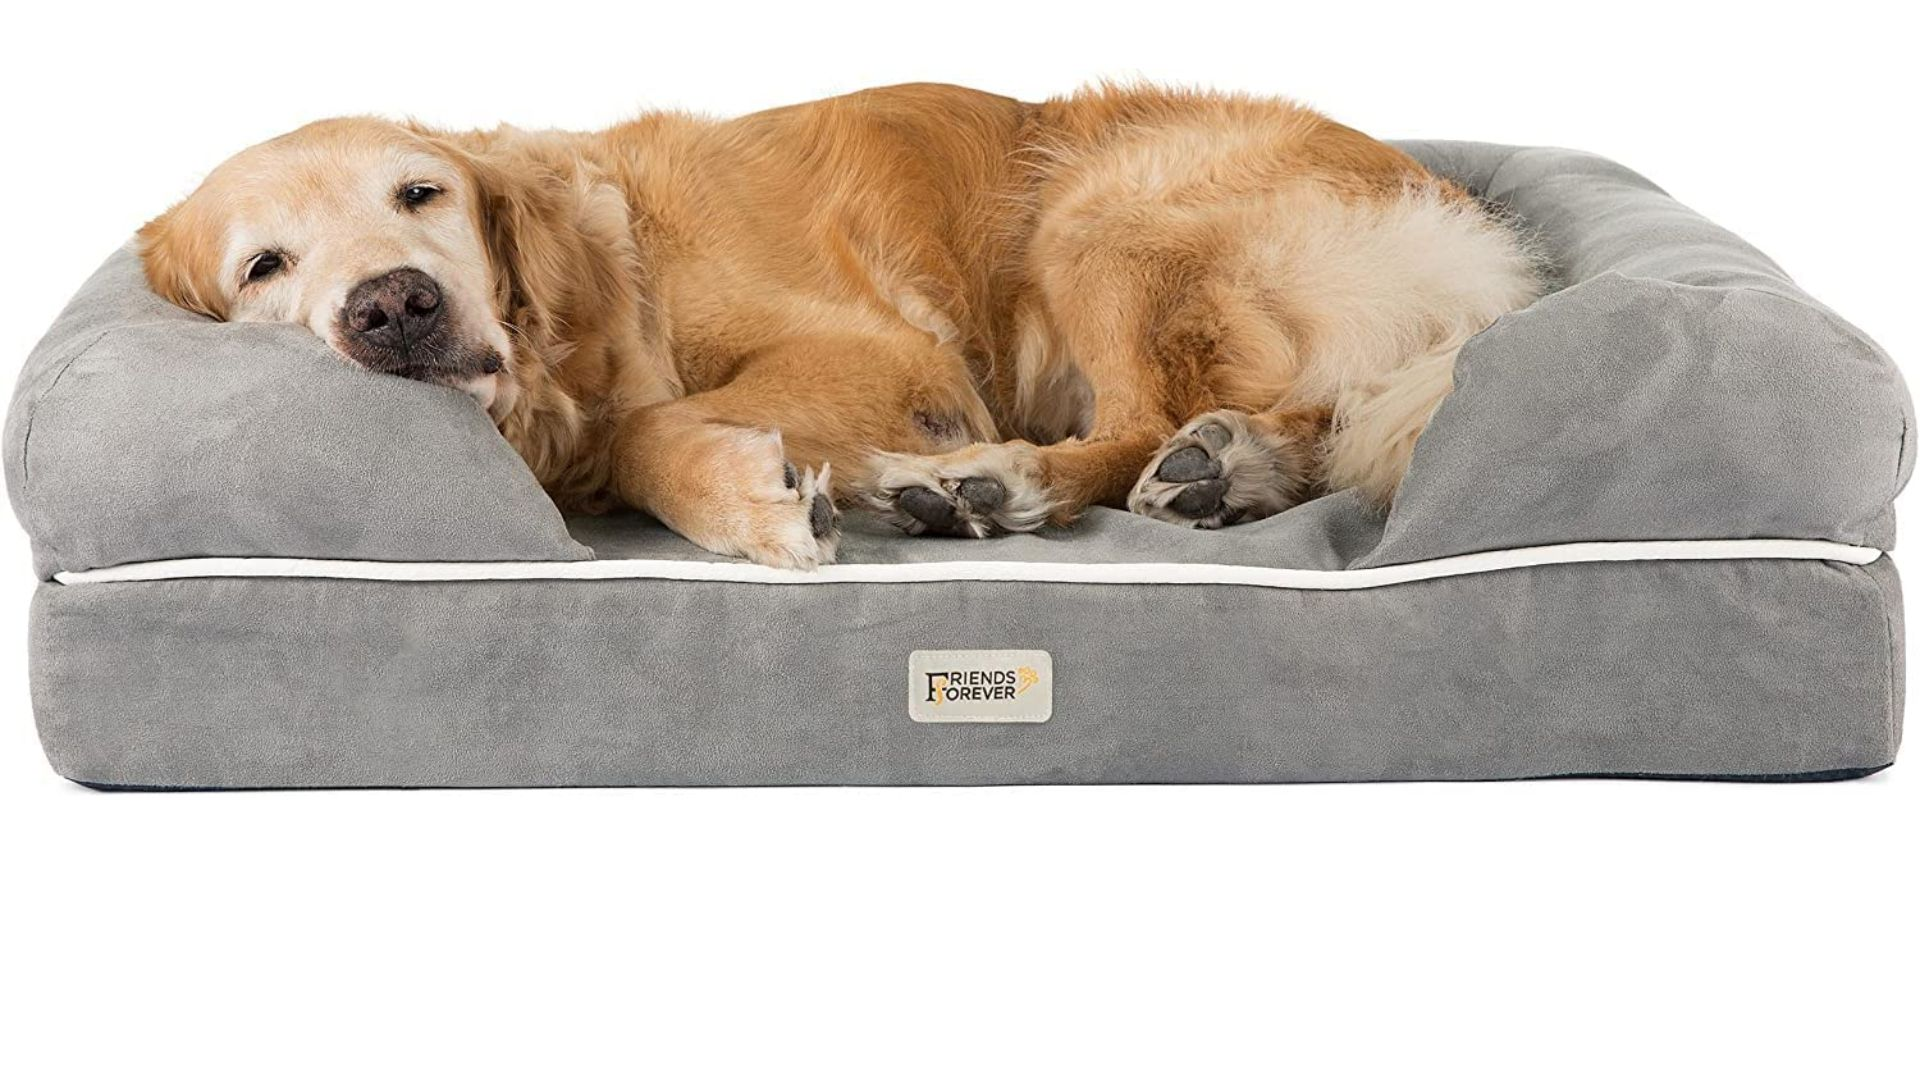 orthopedic dog bed, orthopedic dog beds, dog bed, dog beds, orthopedic bed, orthopedic beds, waterproof liner, senior dogs, memory foam, machine washable cover, best orthopedic dog beds, large dogs, ultimate dog bed, best dog bed